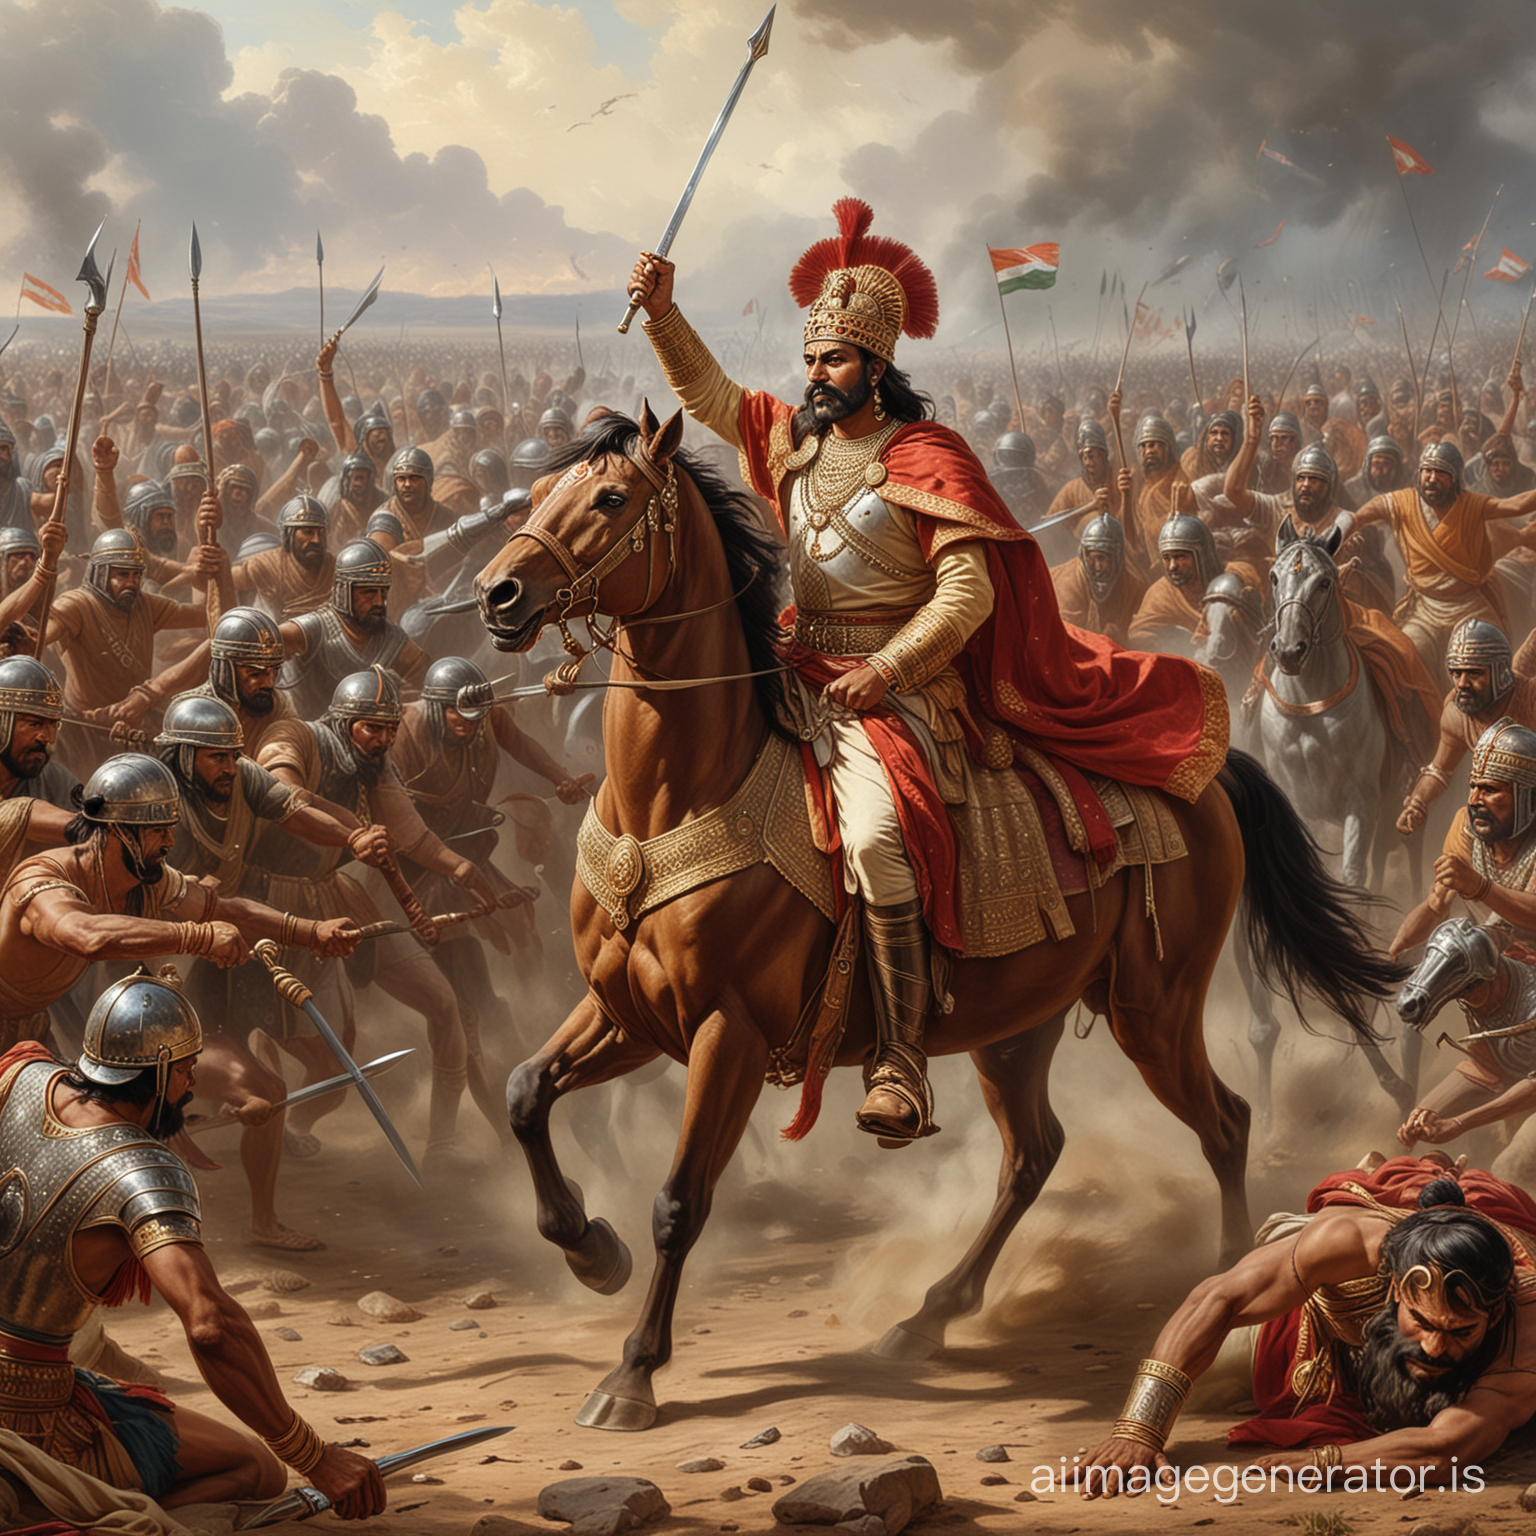 Indian King in battle